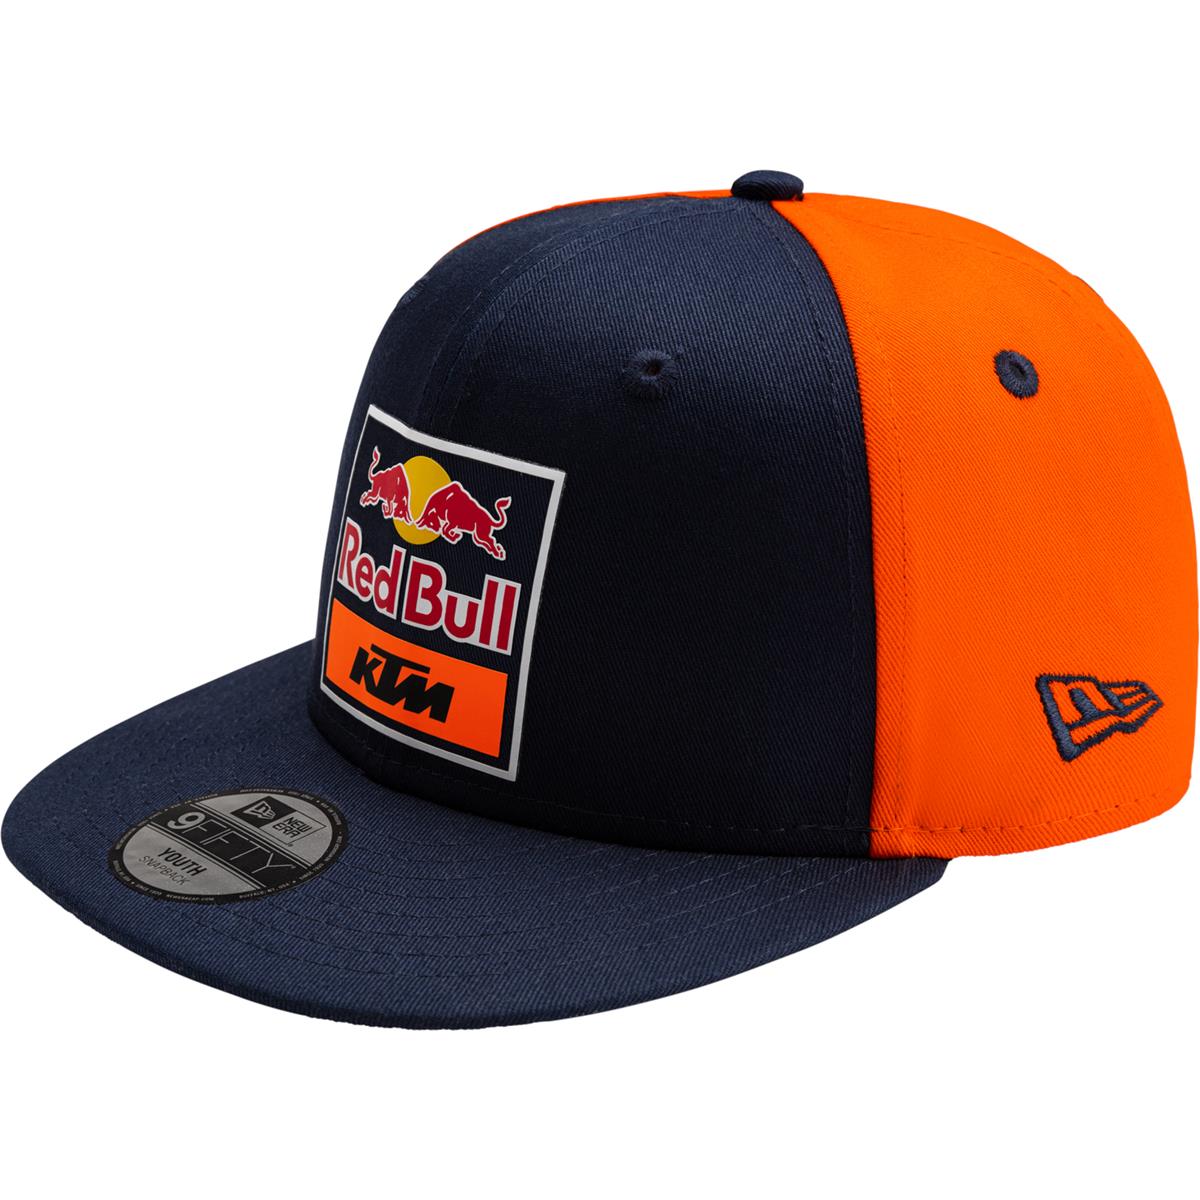 Red Bull Kids Snapback Cap KTM Official Teamline Replica - Flat - Navy/Orange